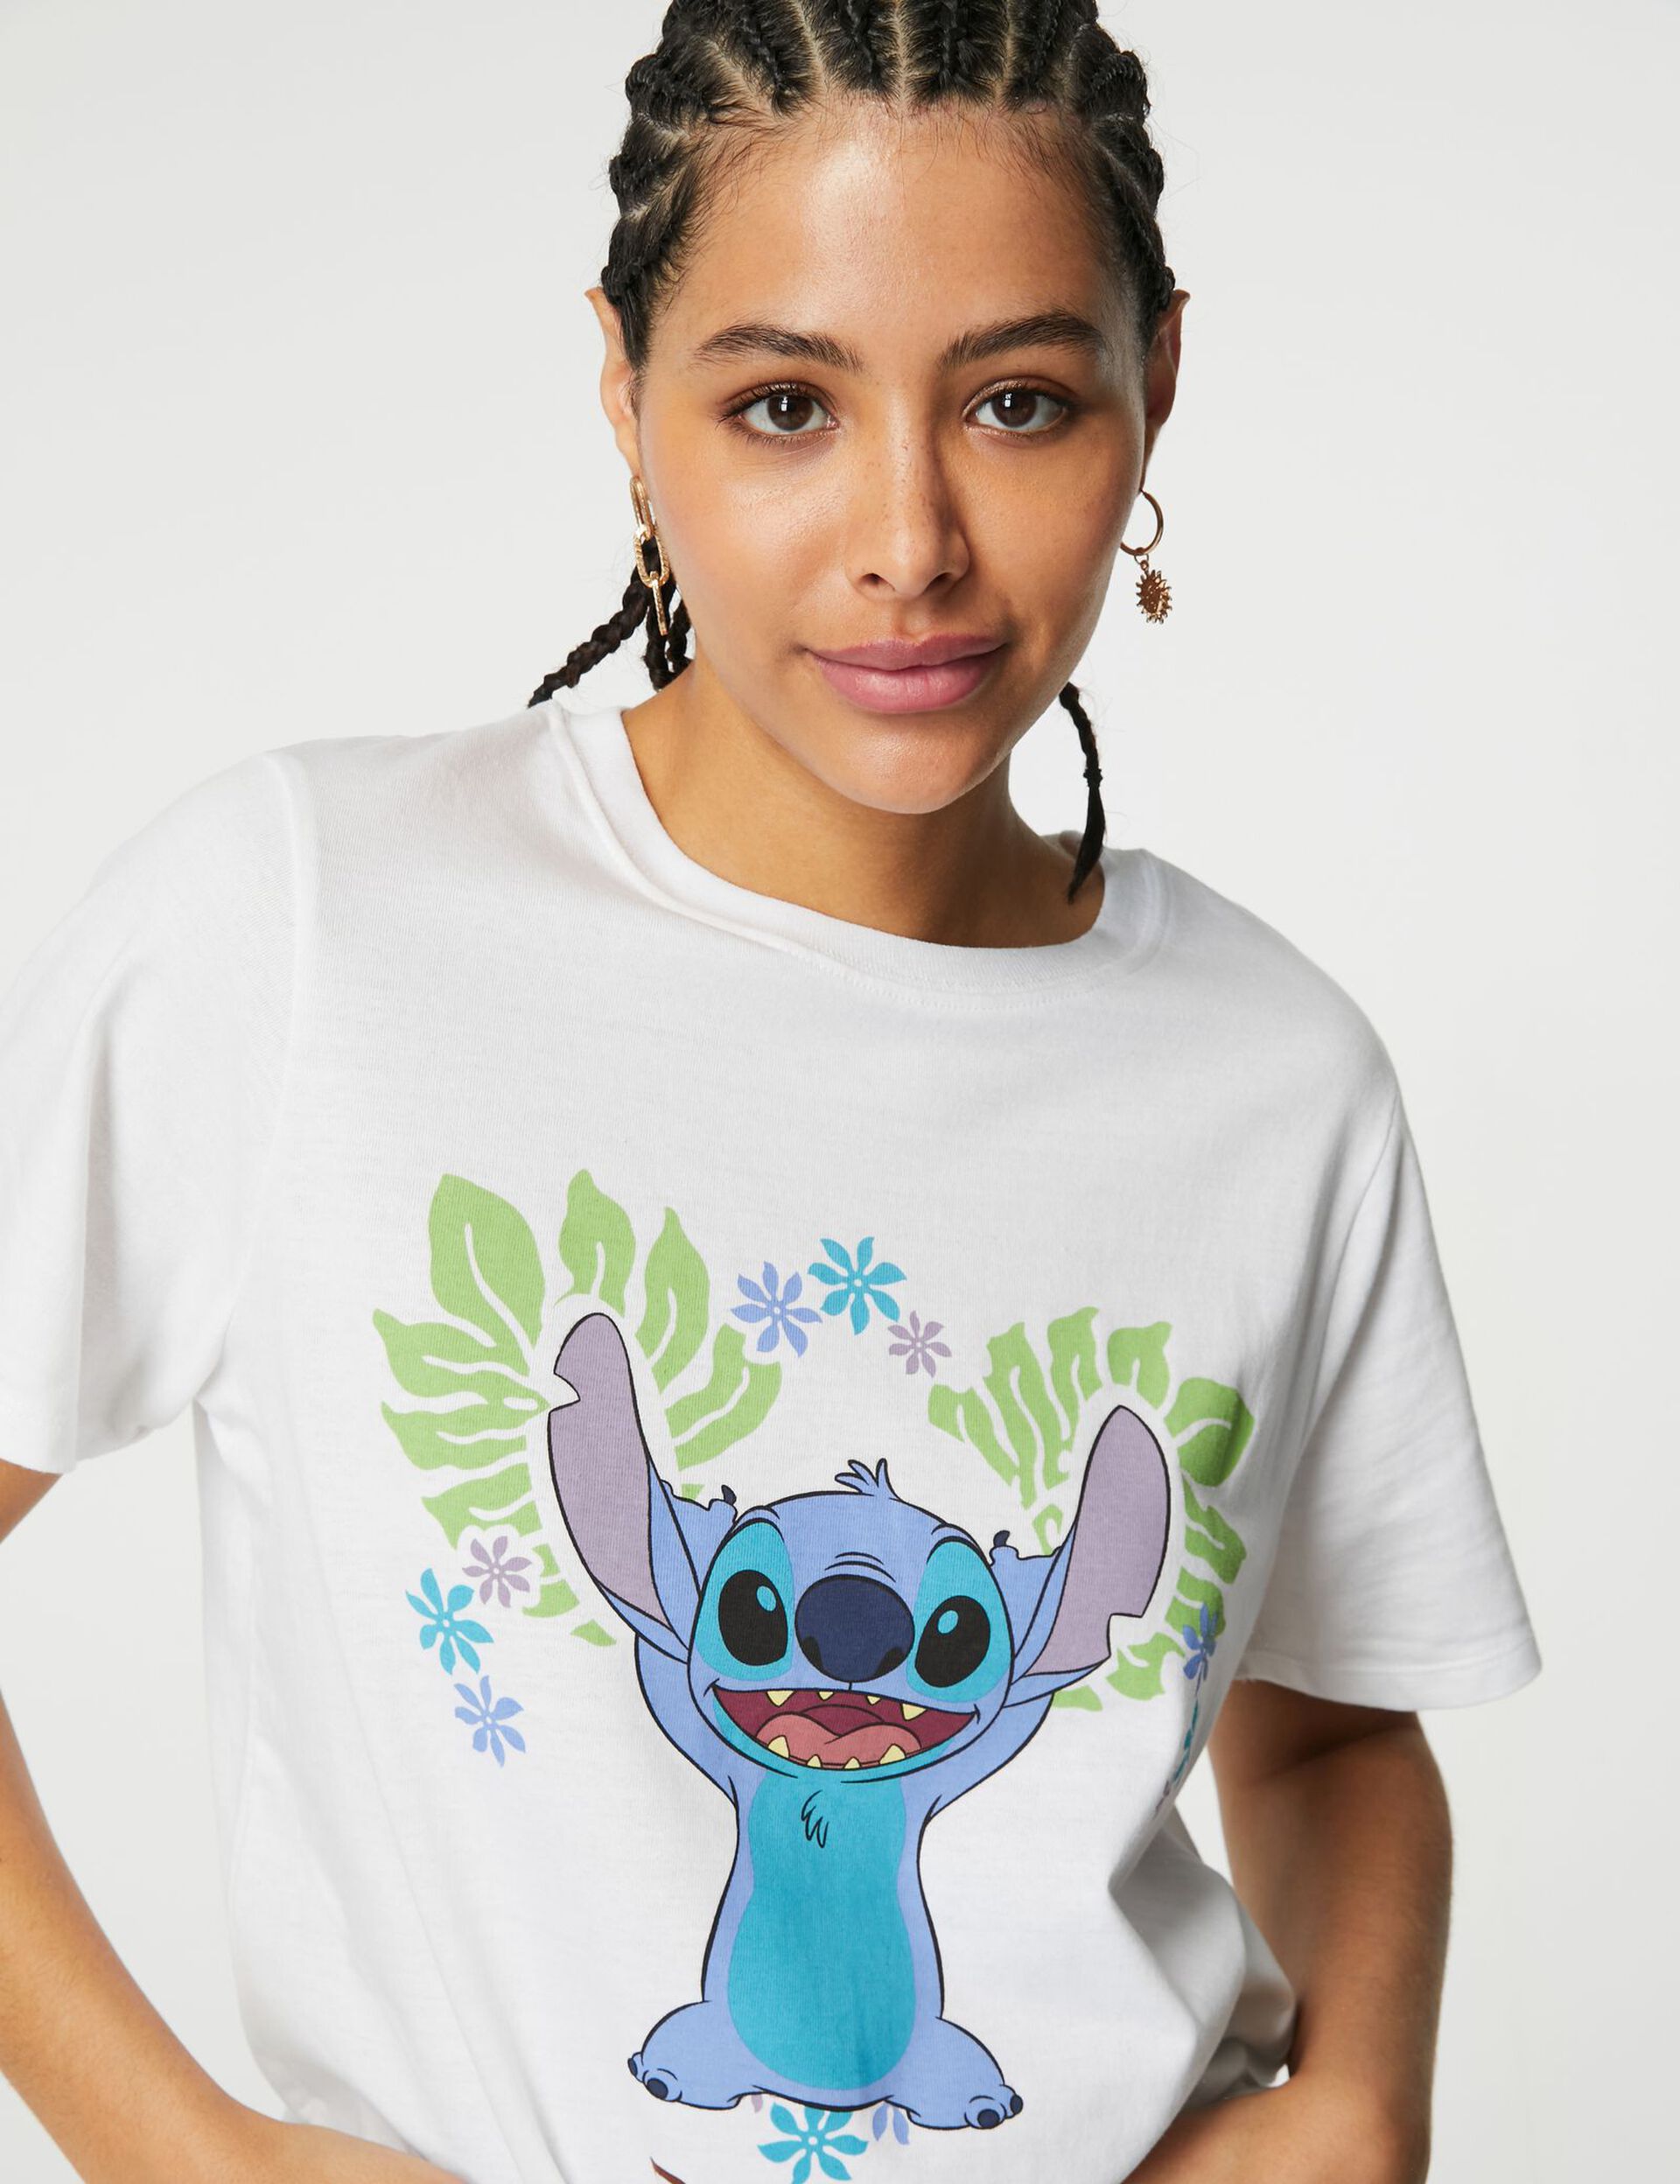 Tee-shirt Stitch